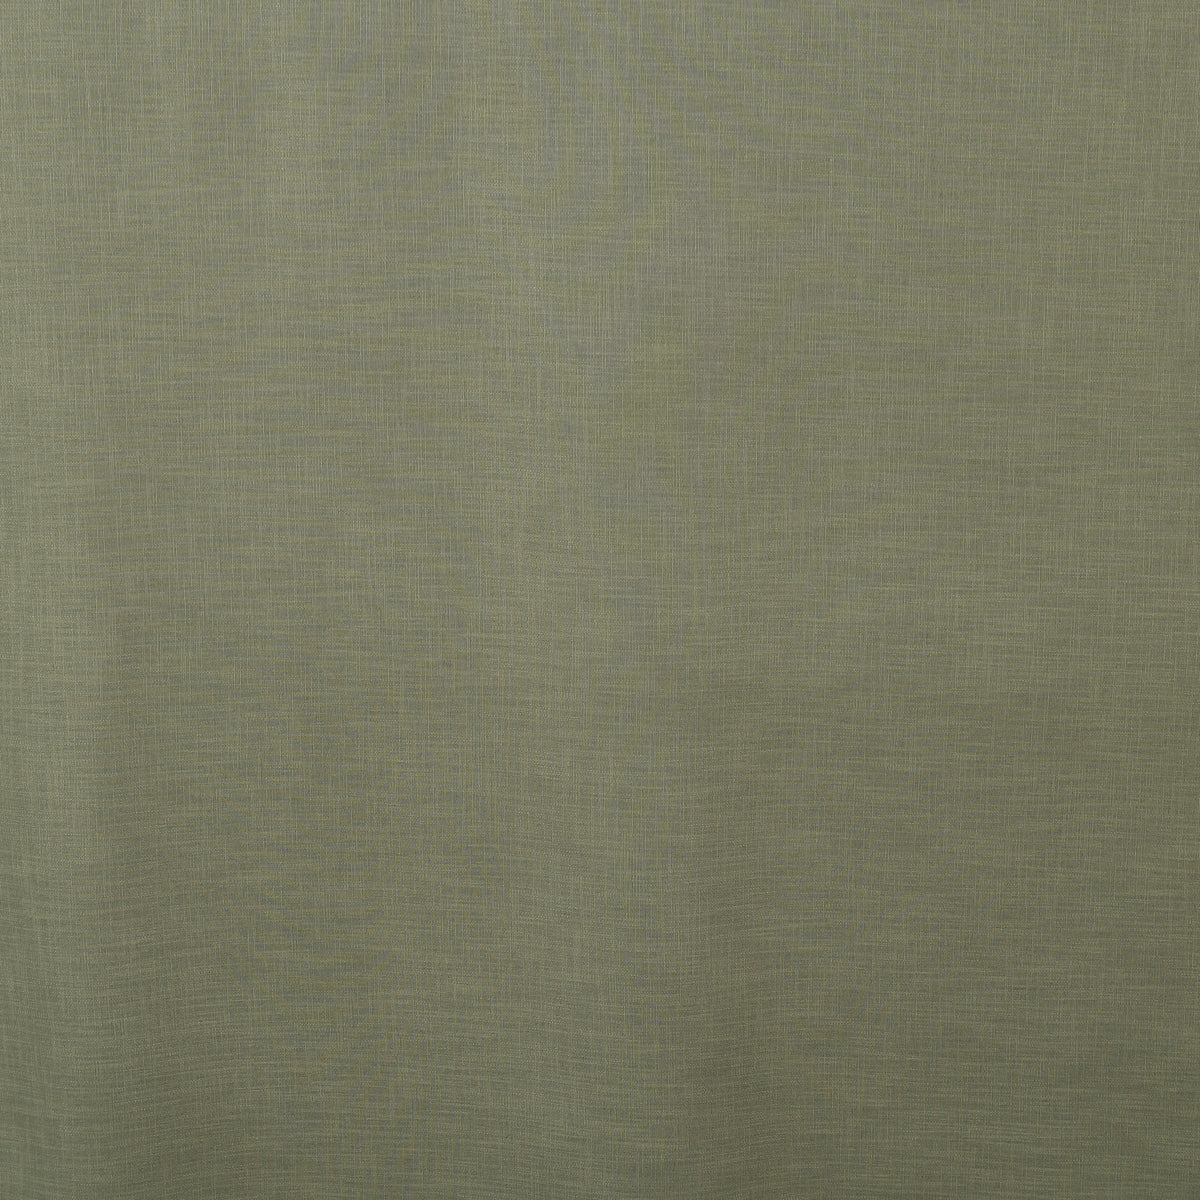 Night curtain green gray mode